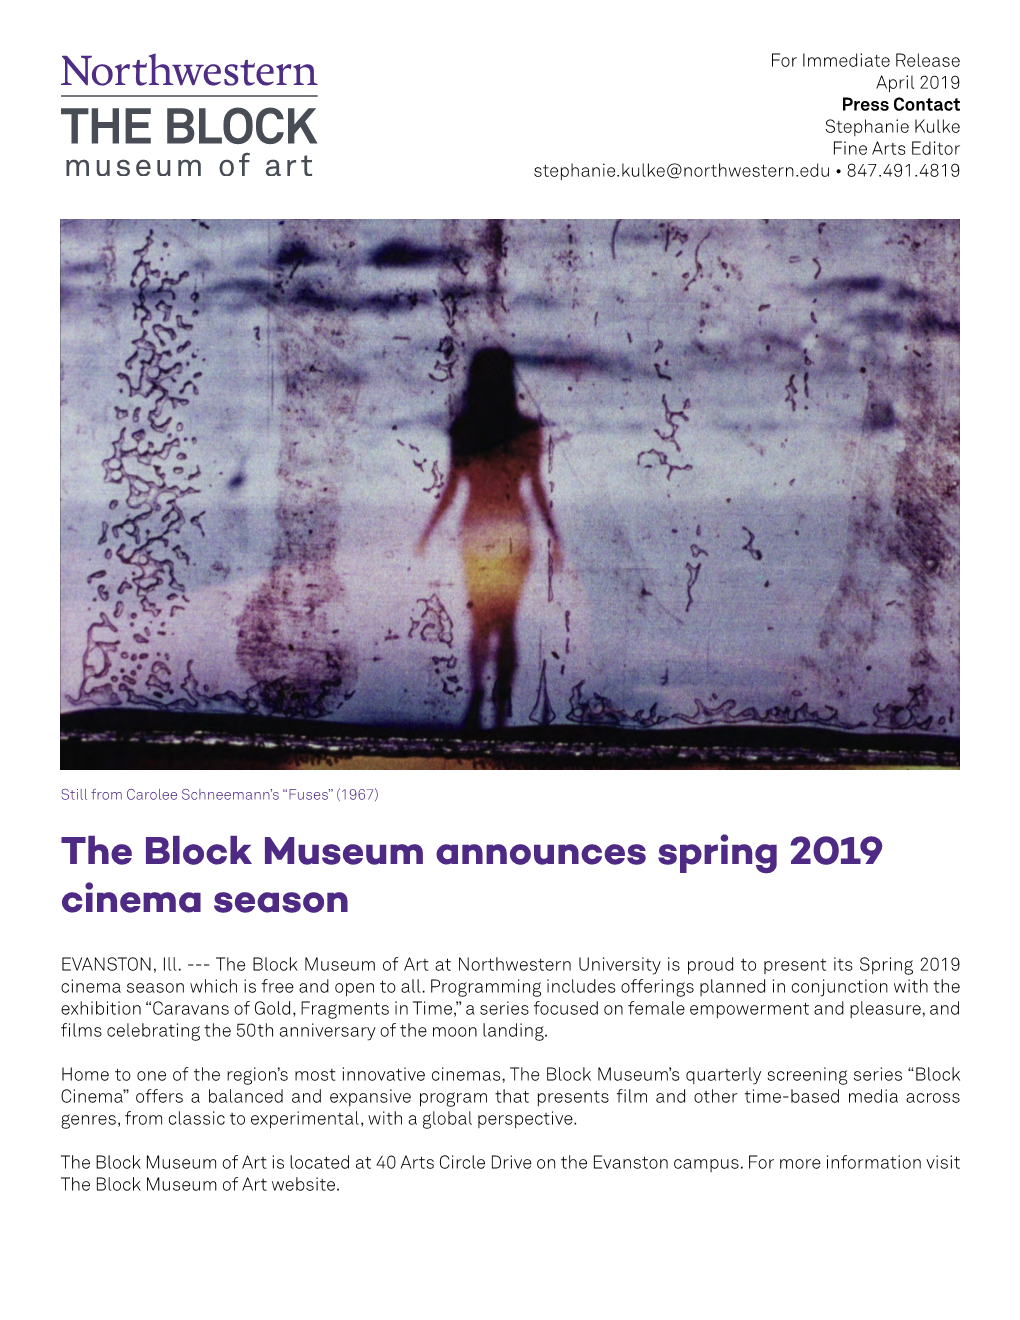 The Block Museum Announces Spring 2019 Cinema Season